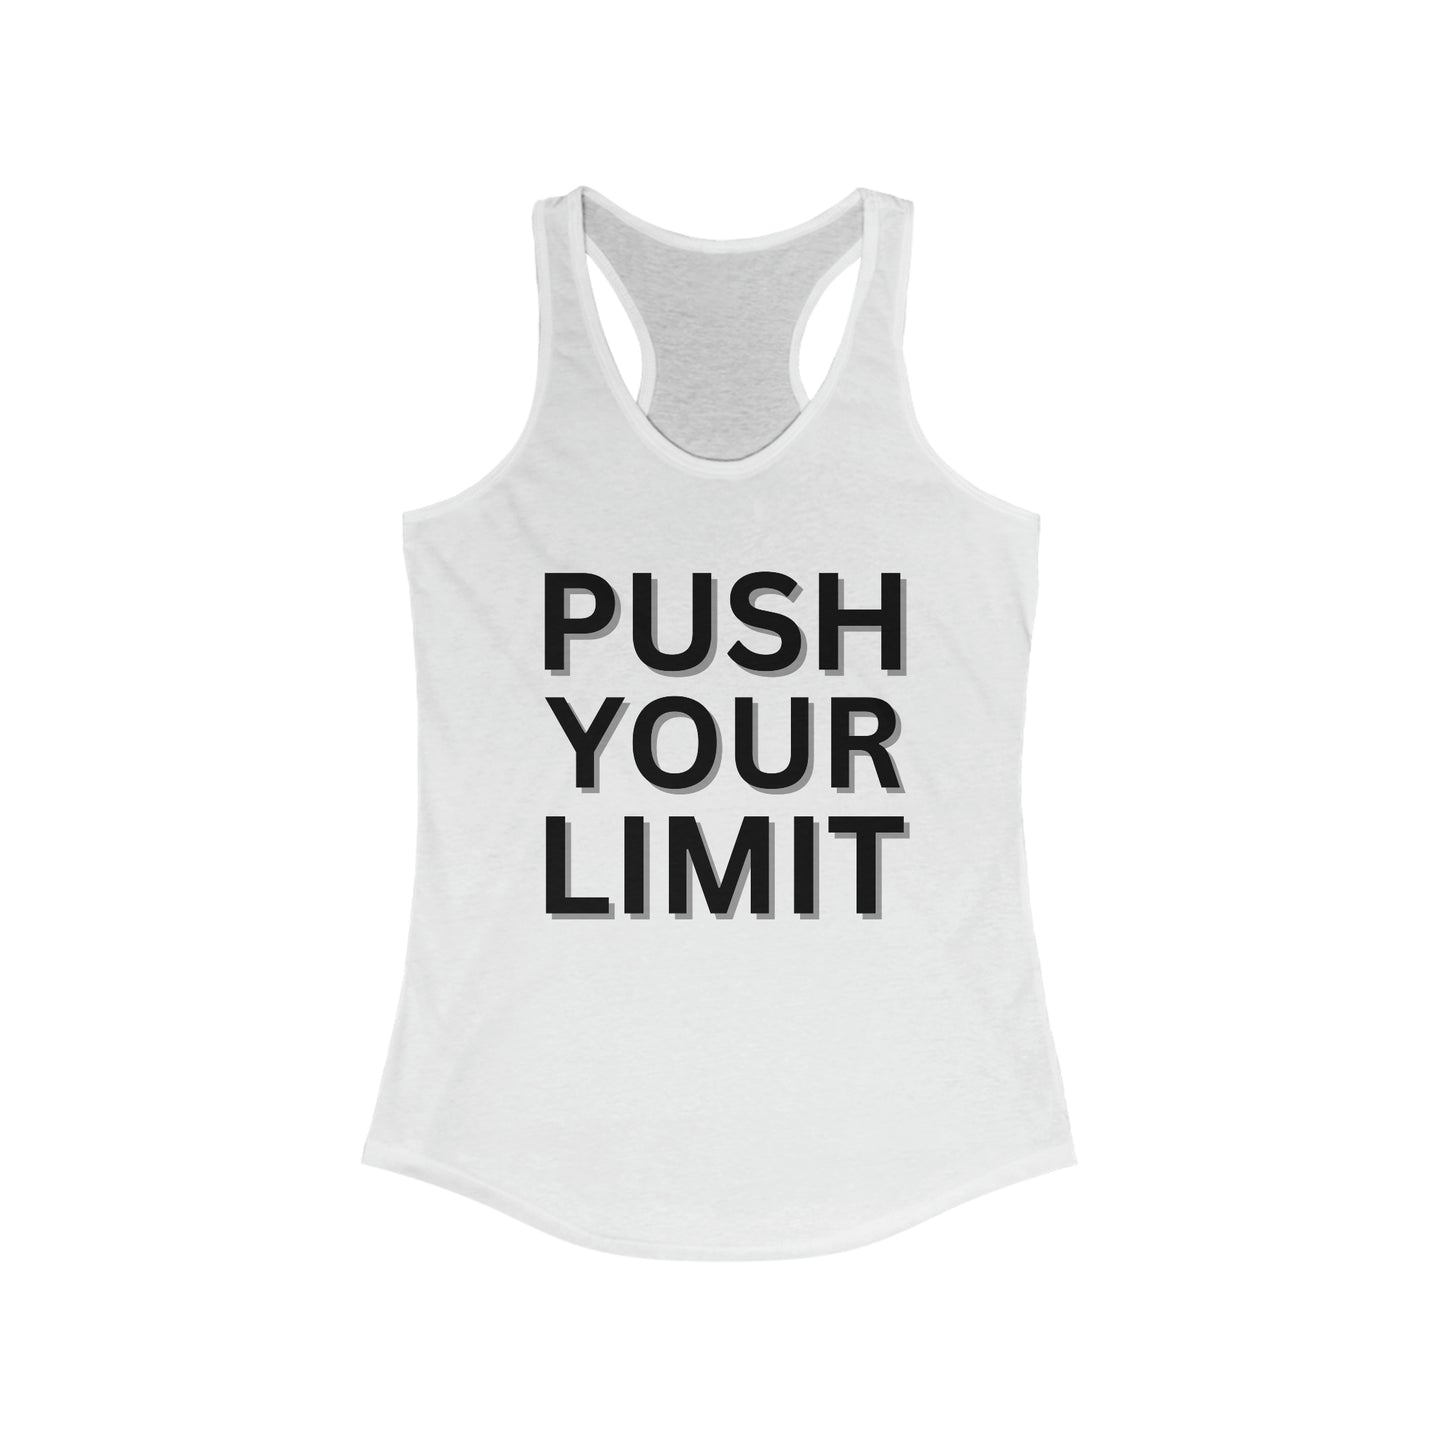 Push your limit workout tank Gym tank top